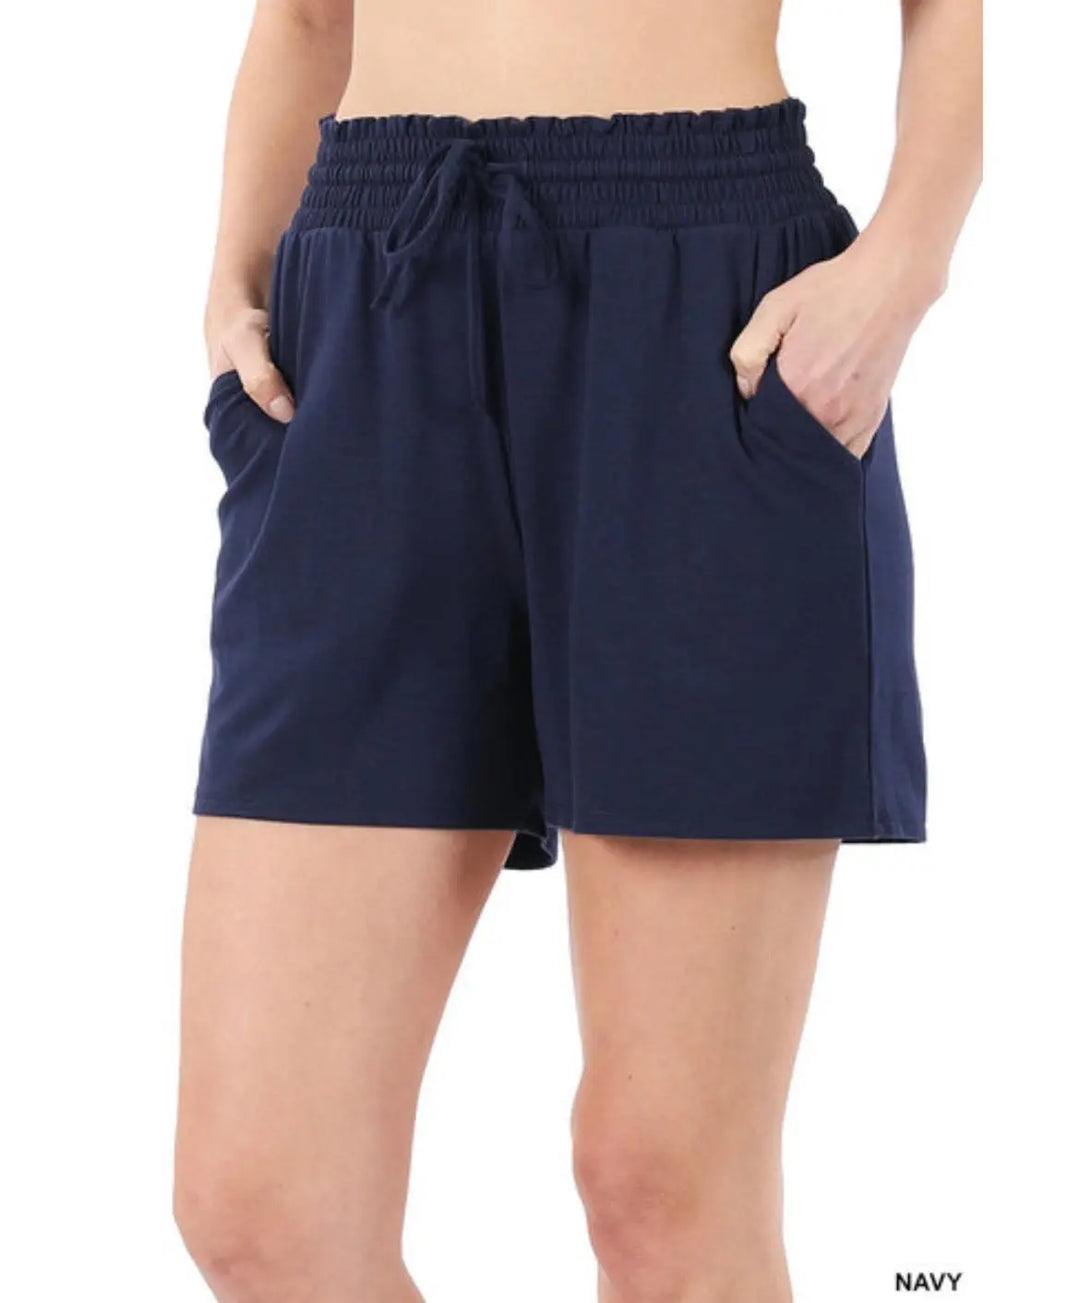 Navy Drawstring Shorts-shorts-Zenana-Styled by Steph-Women's Fashion Clothing Boutique, Indiana